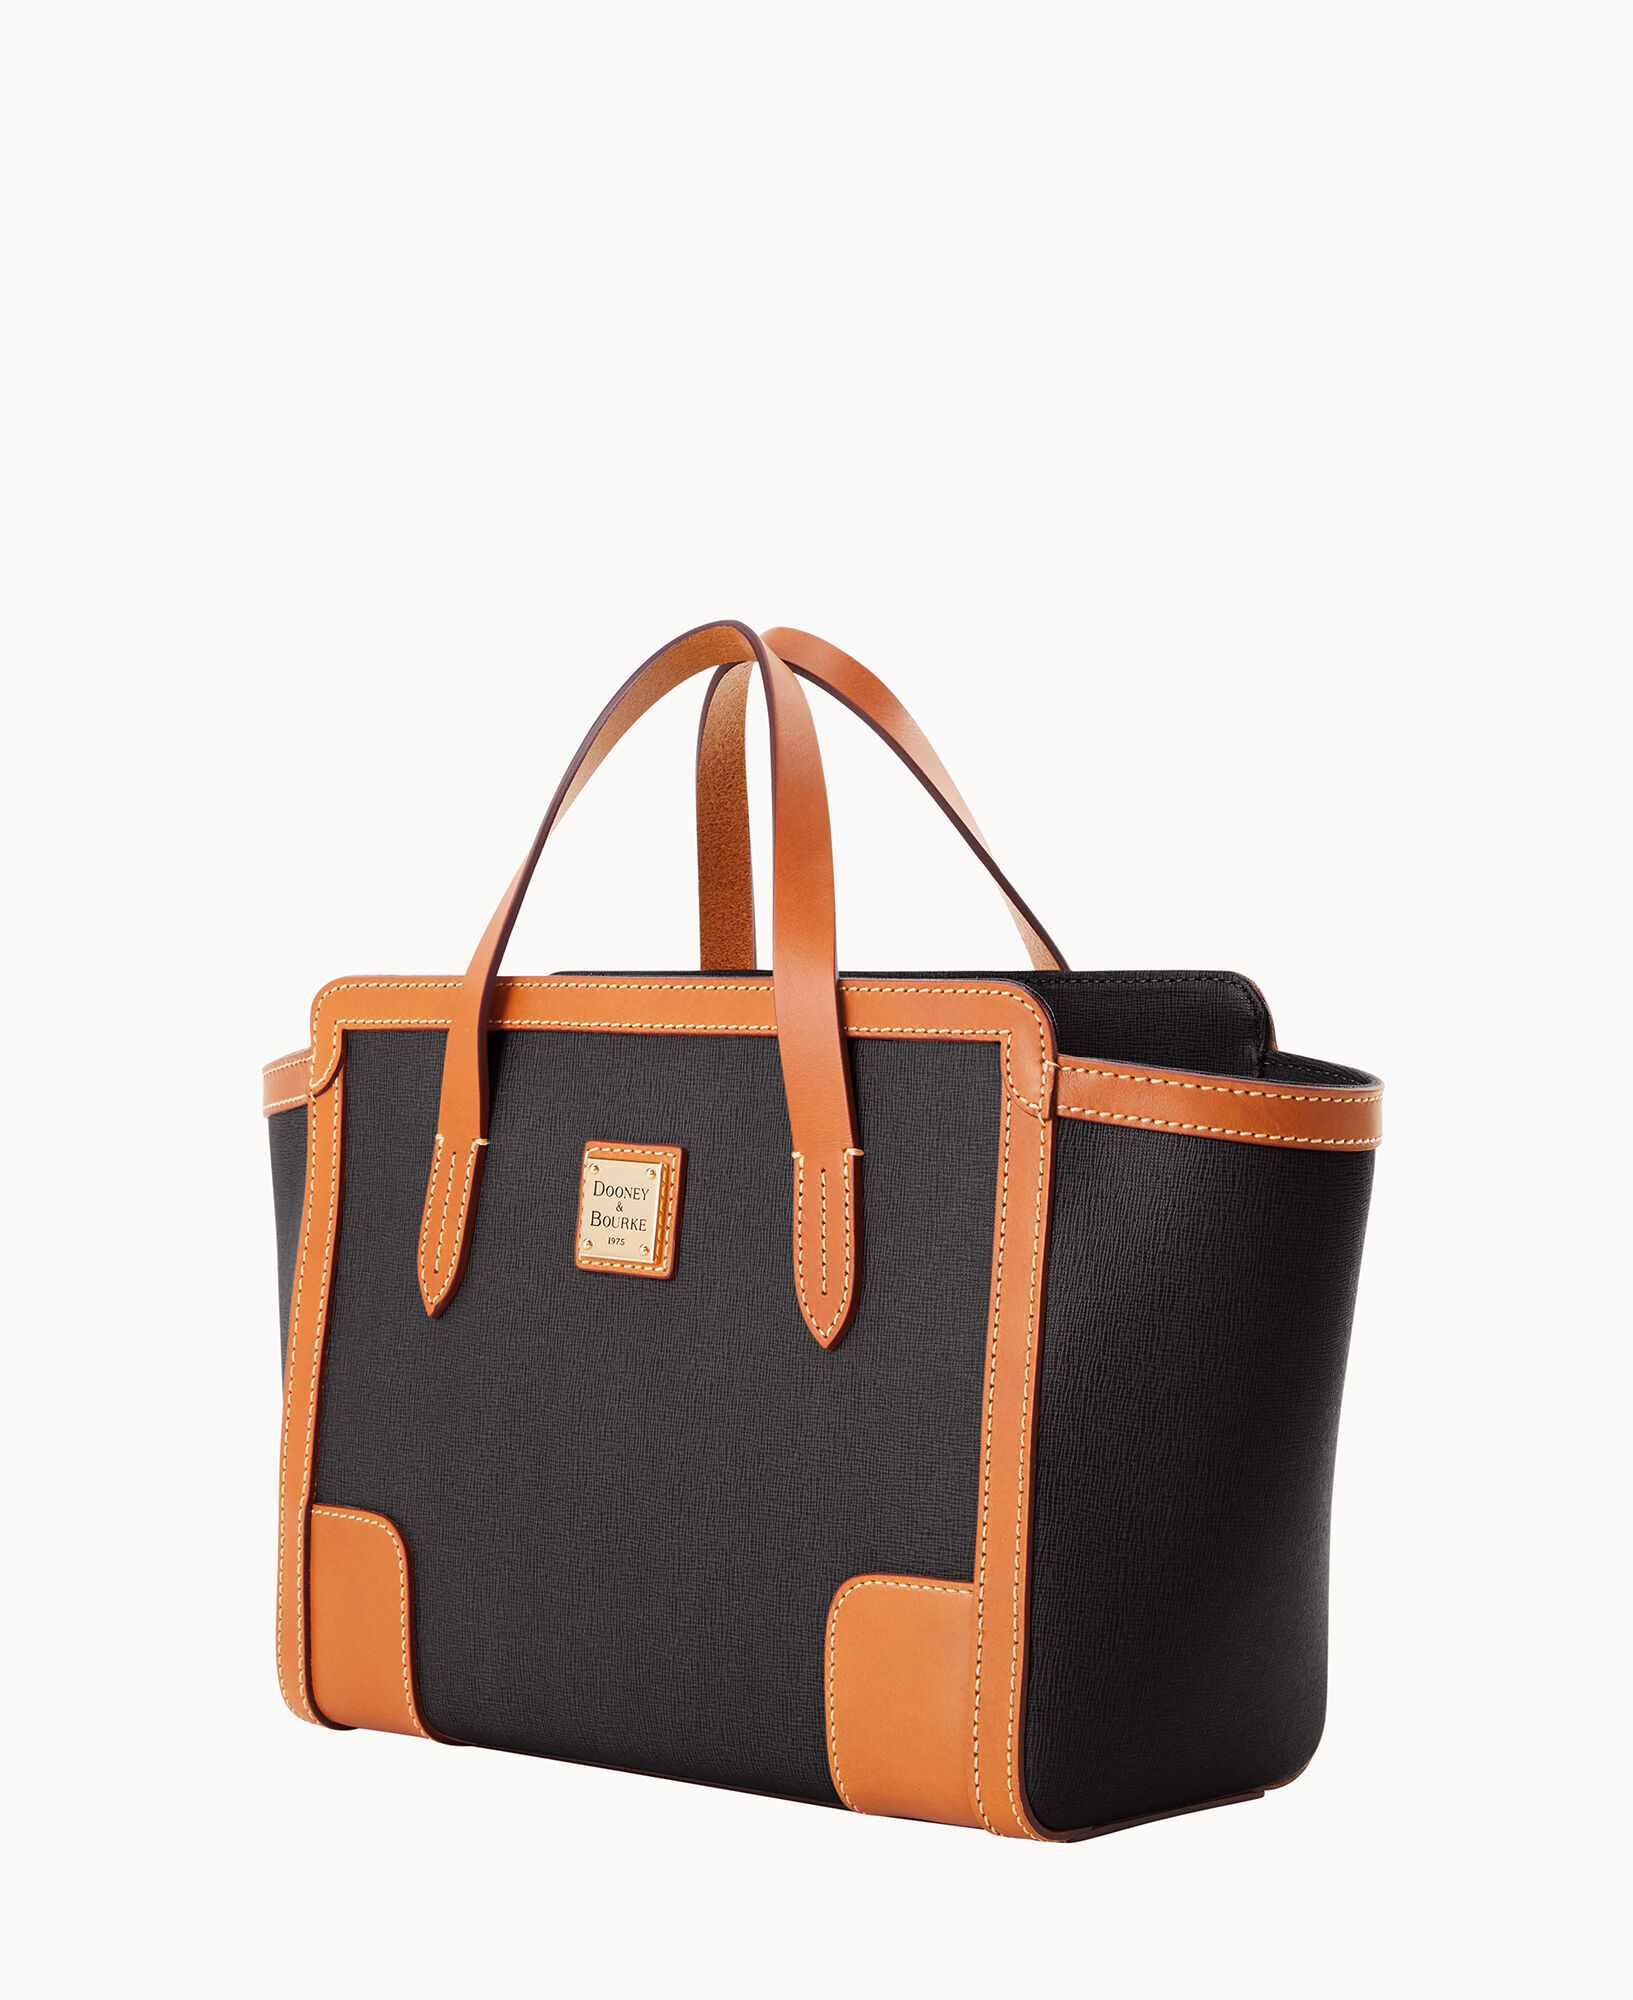 Dooney & Bourke Charleston Saffiano Leather Tote Bag